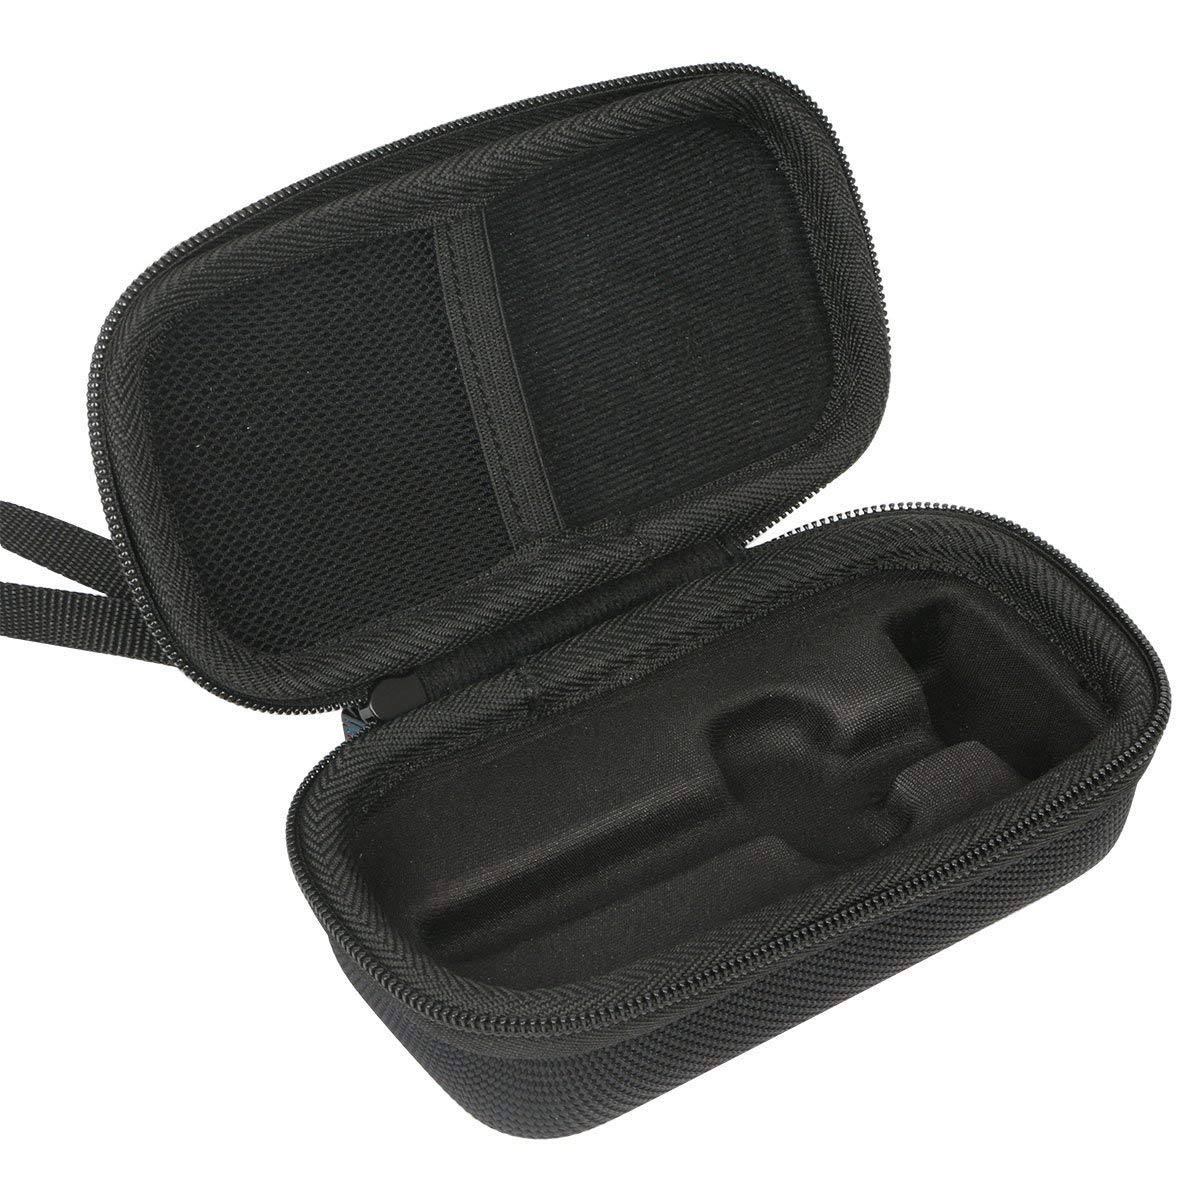 Khanka Hard Travel Case replacement for WEISHI Double Edge Safety Razor/Merkur Long Handled Safety Razor Black